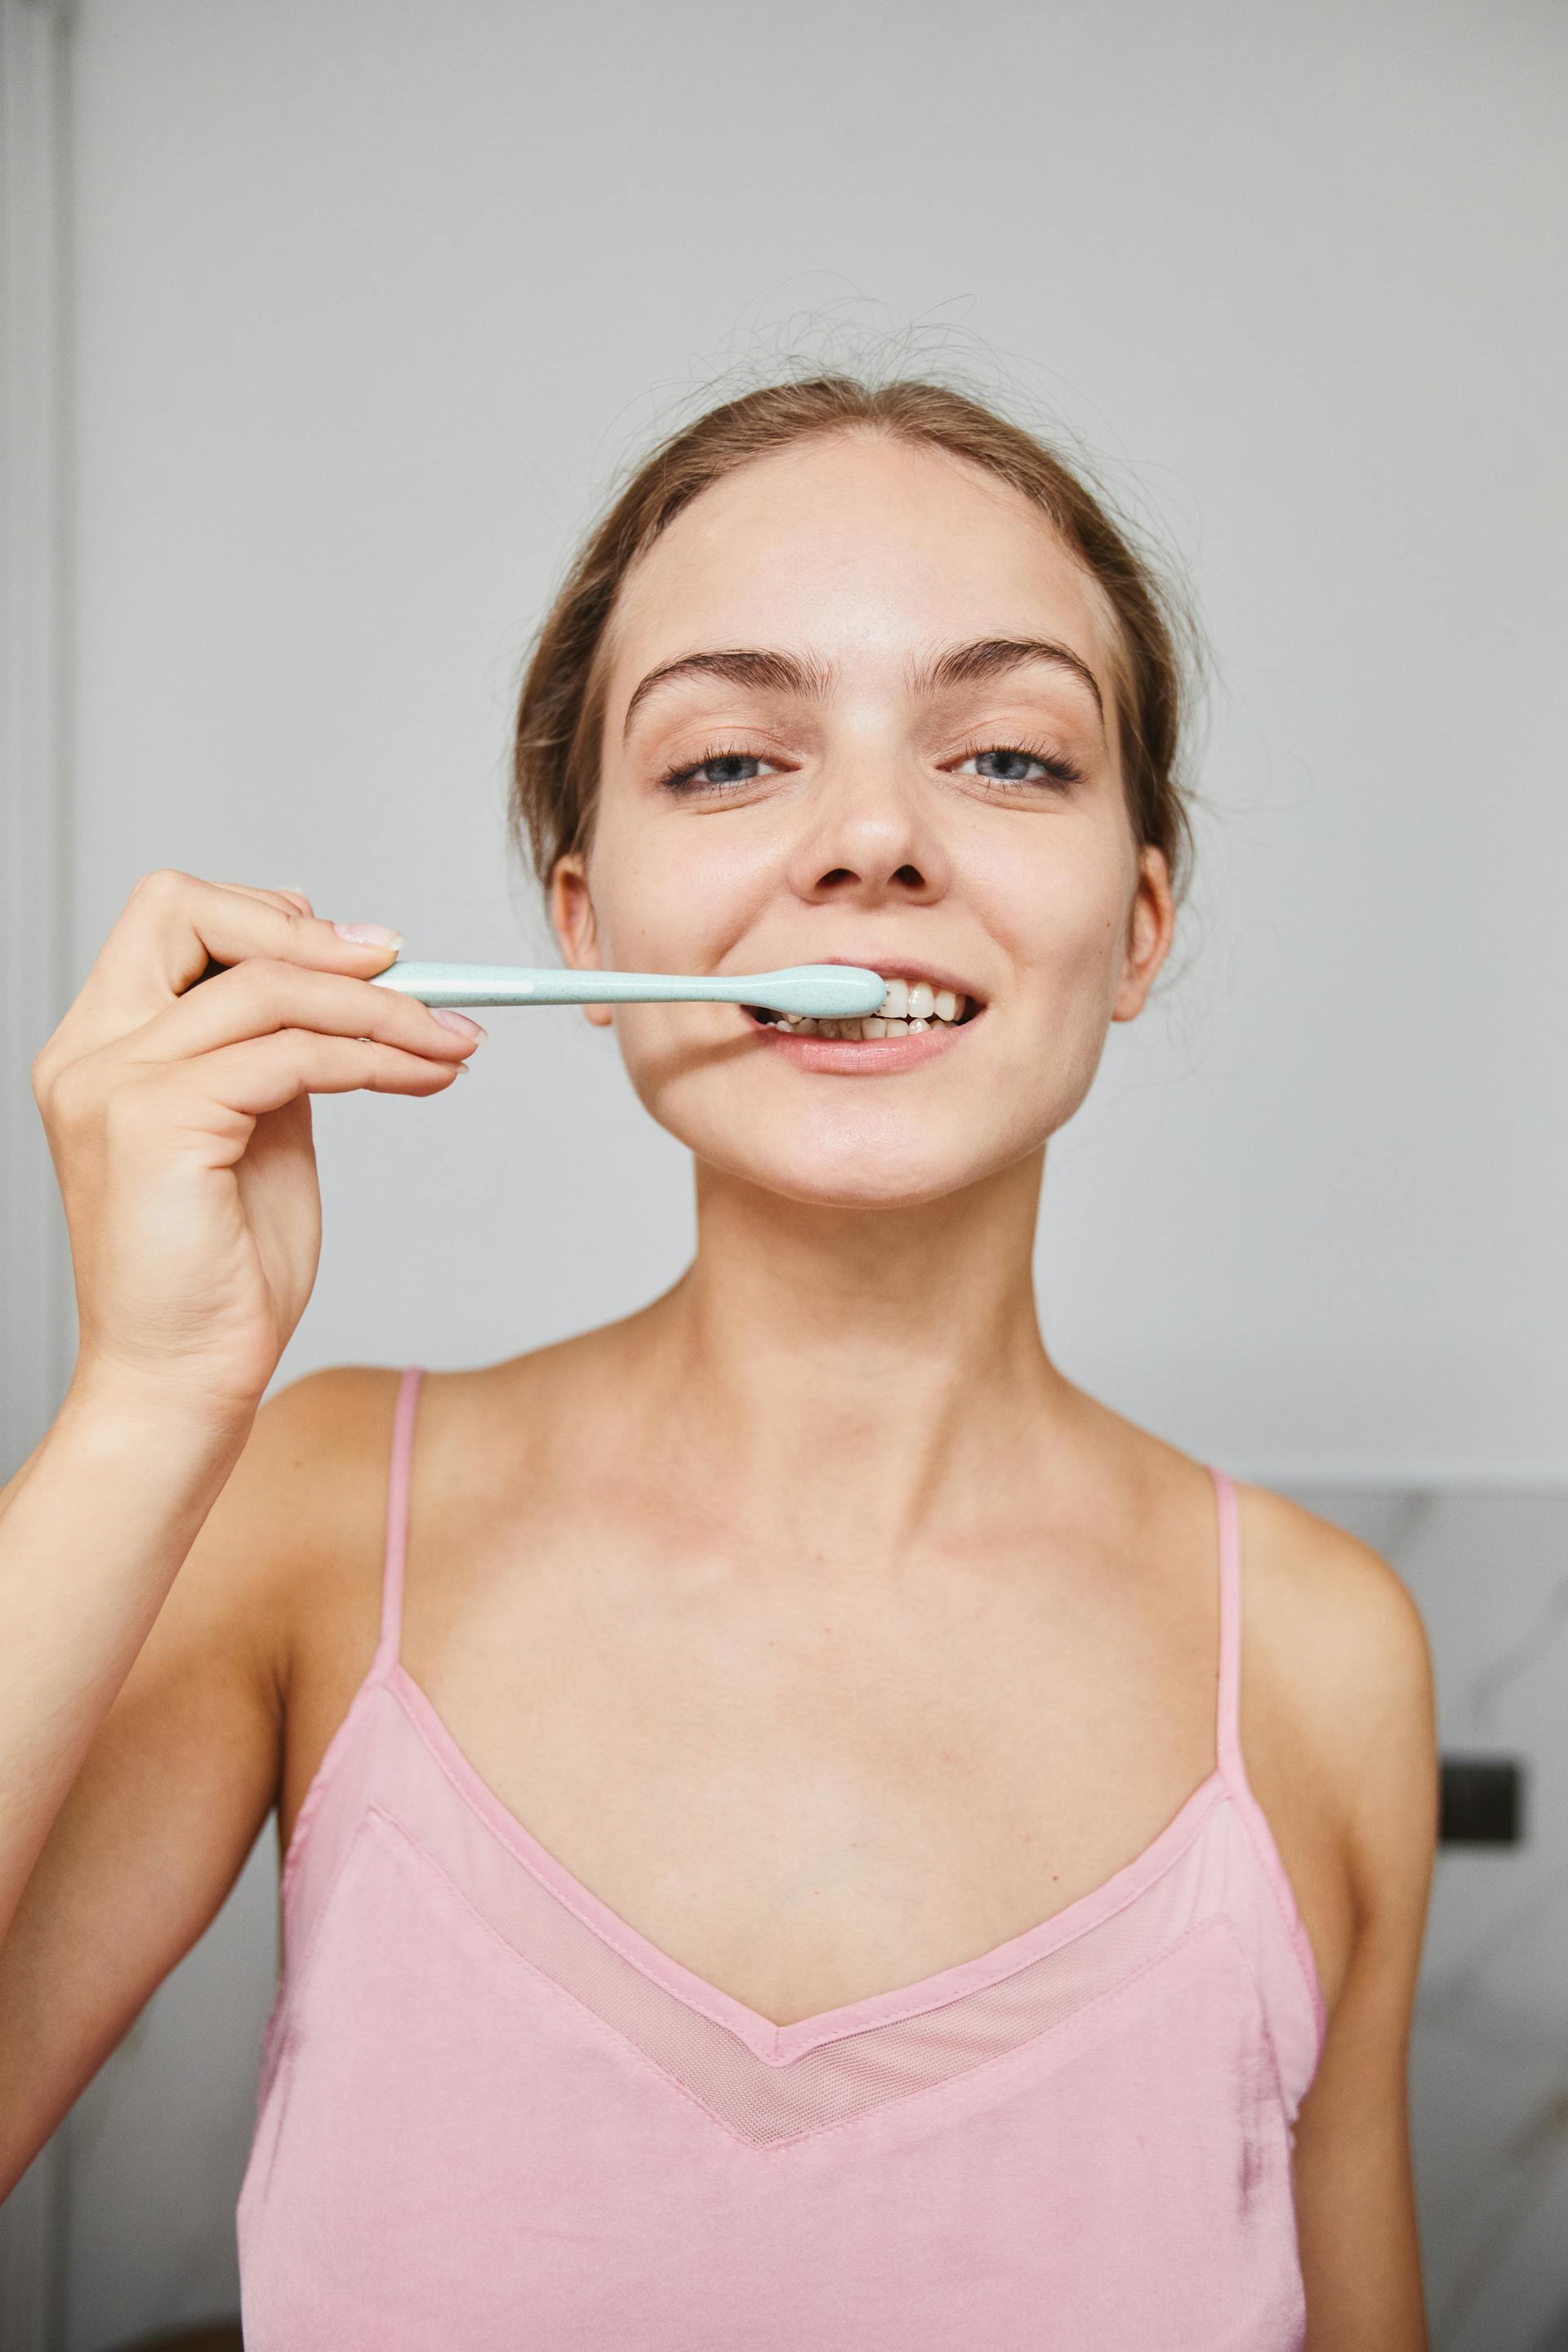 A woman brushing her teeth | Source: Pexels